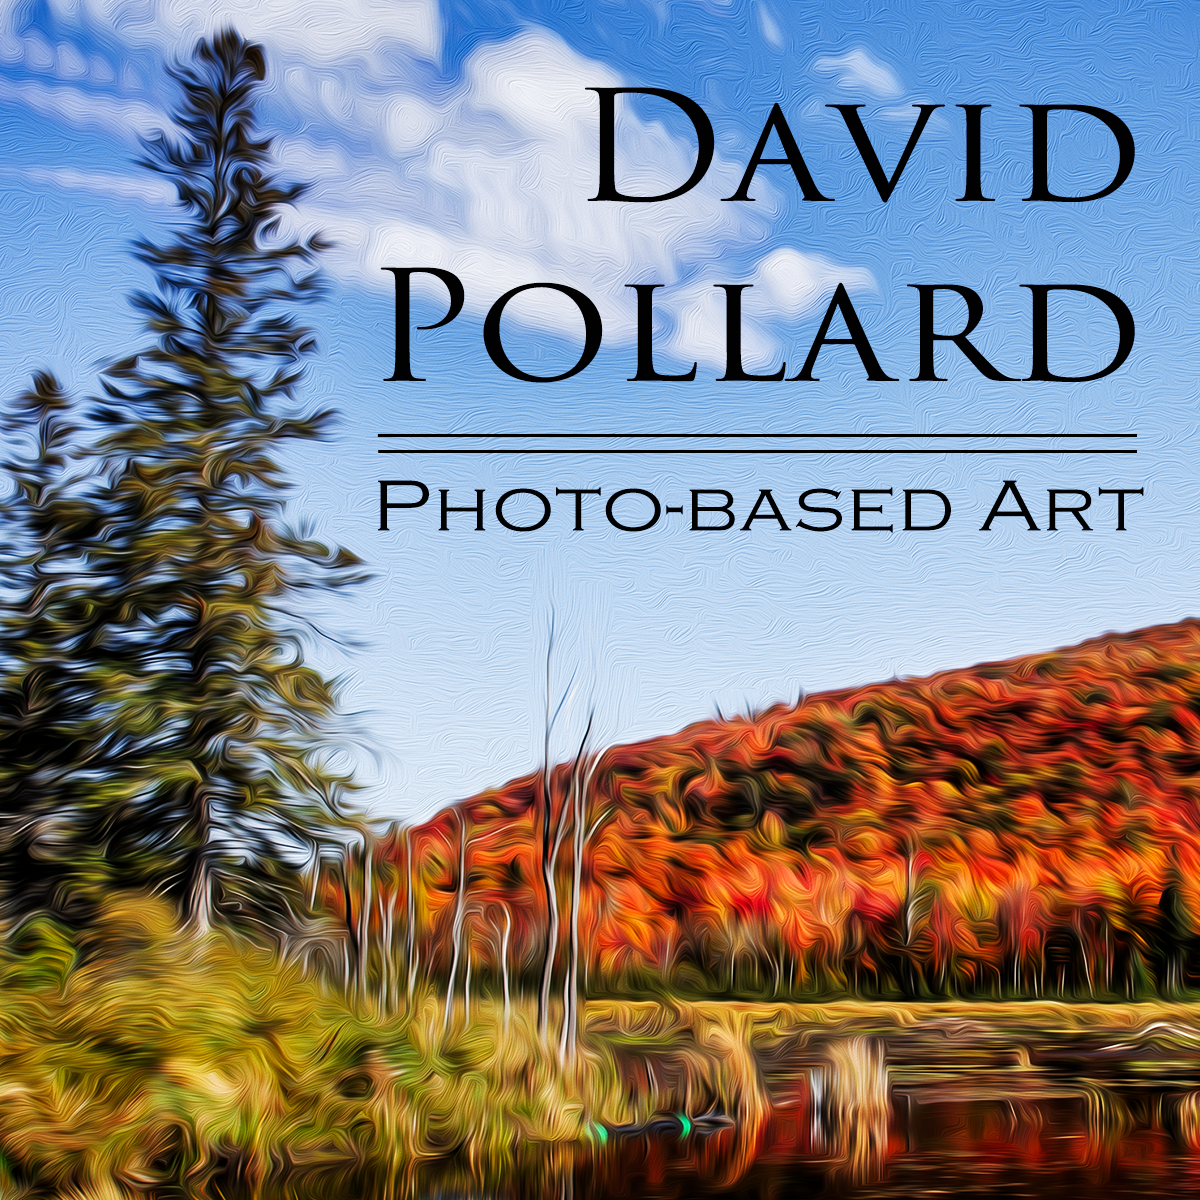 David Pollard